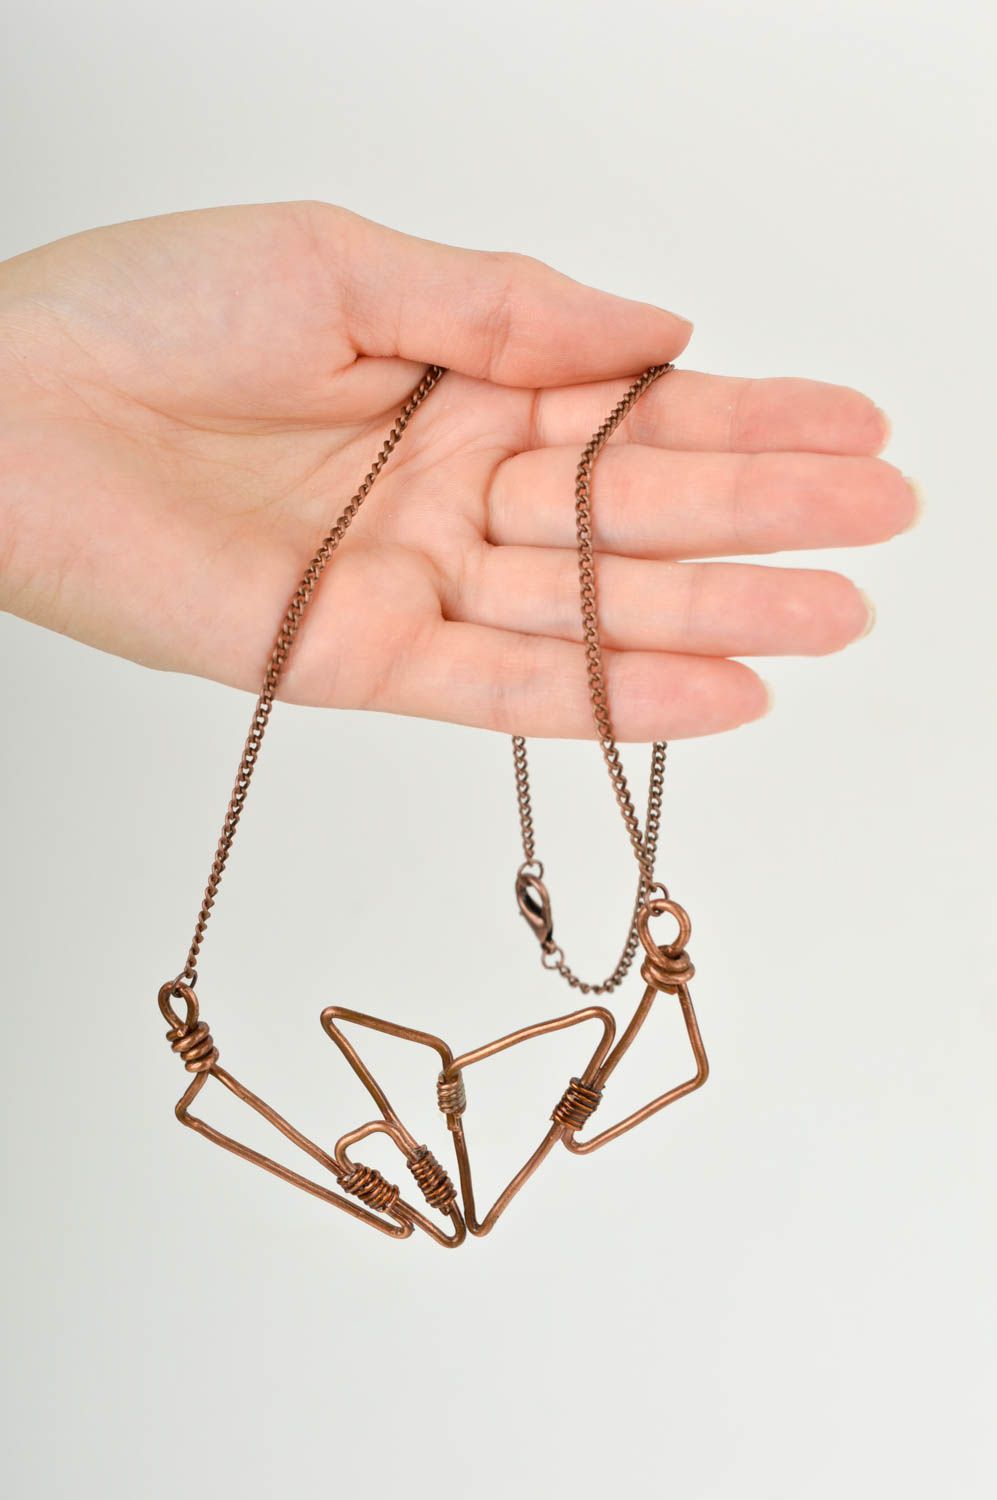 Unusual handmade metal pendant fashion accessories metal craft small gifts photo 1